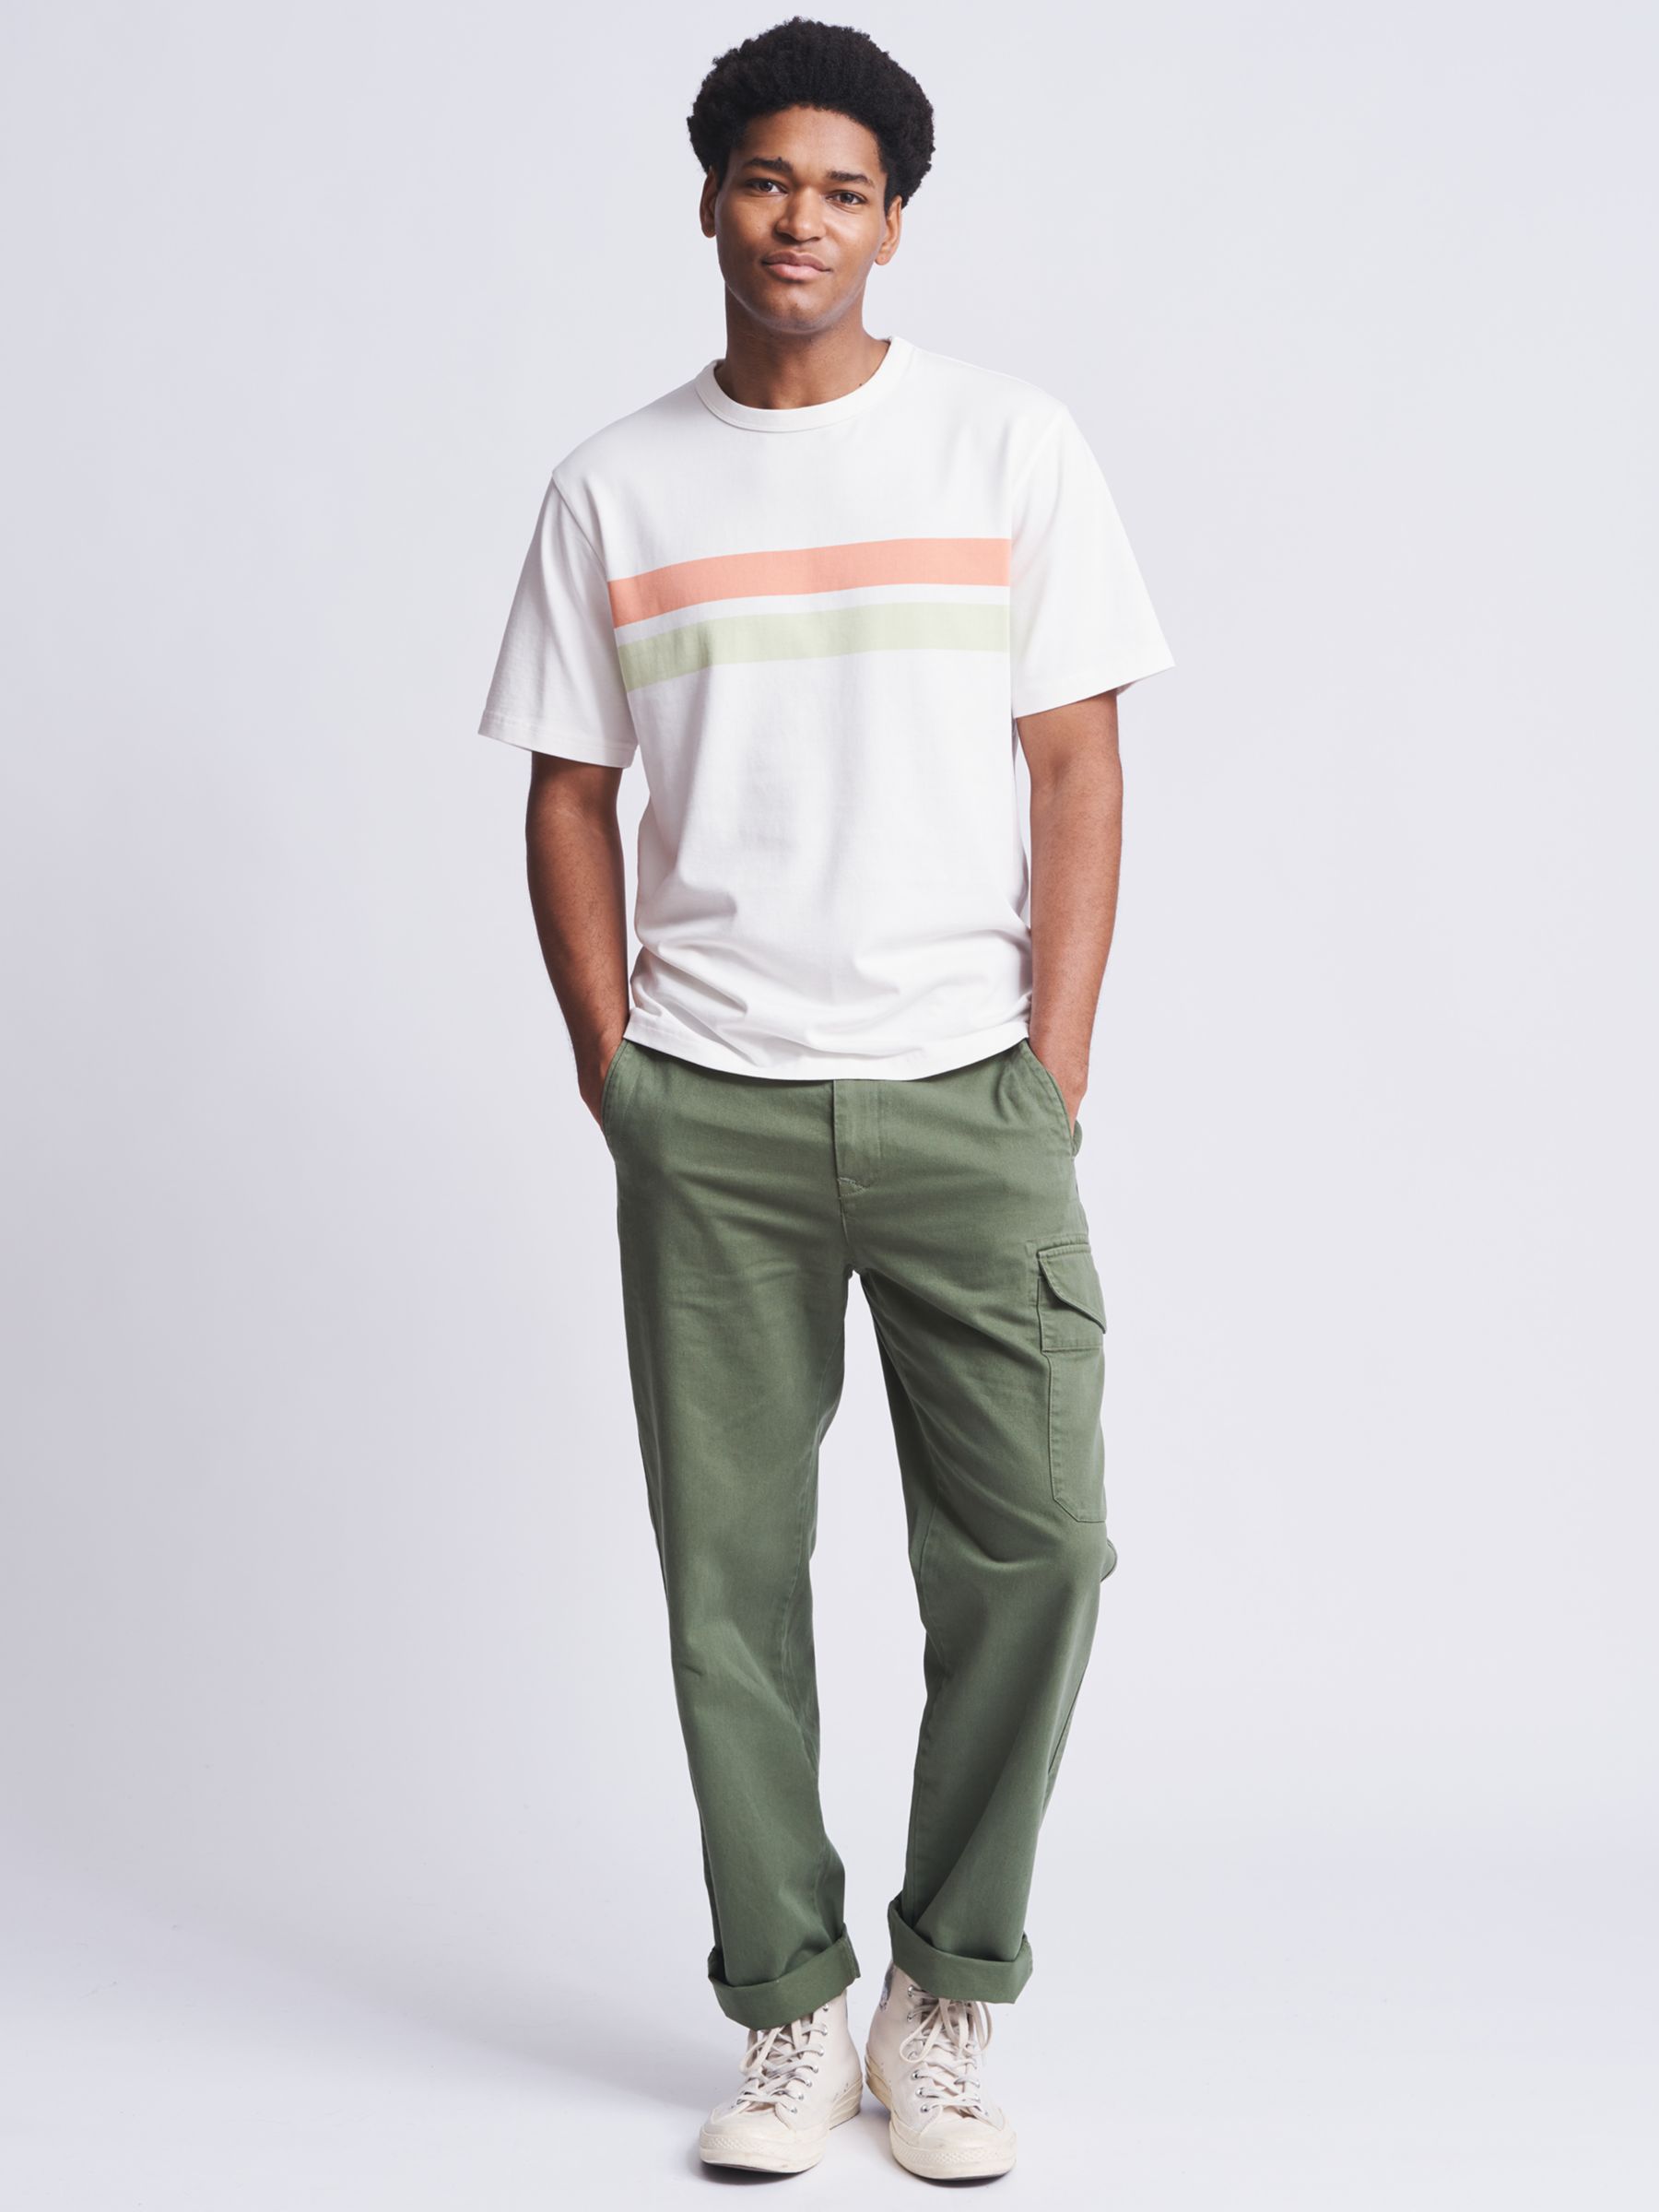 Aubin Santon Relaxed Cotton T-Shirt, Ecru Stripe, S